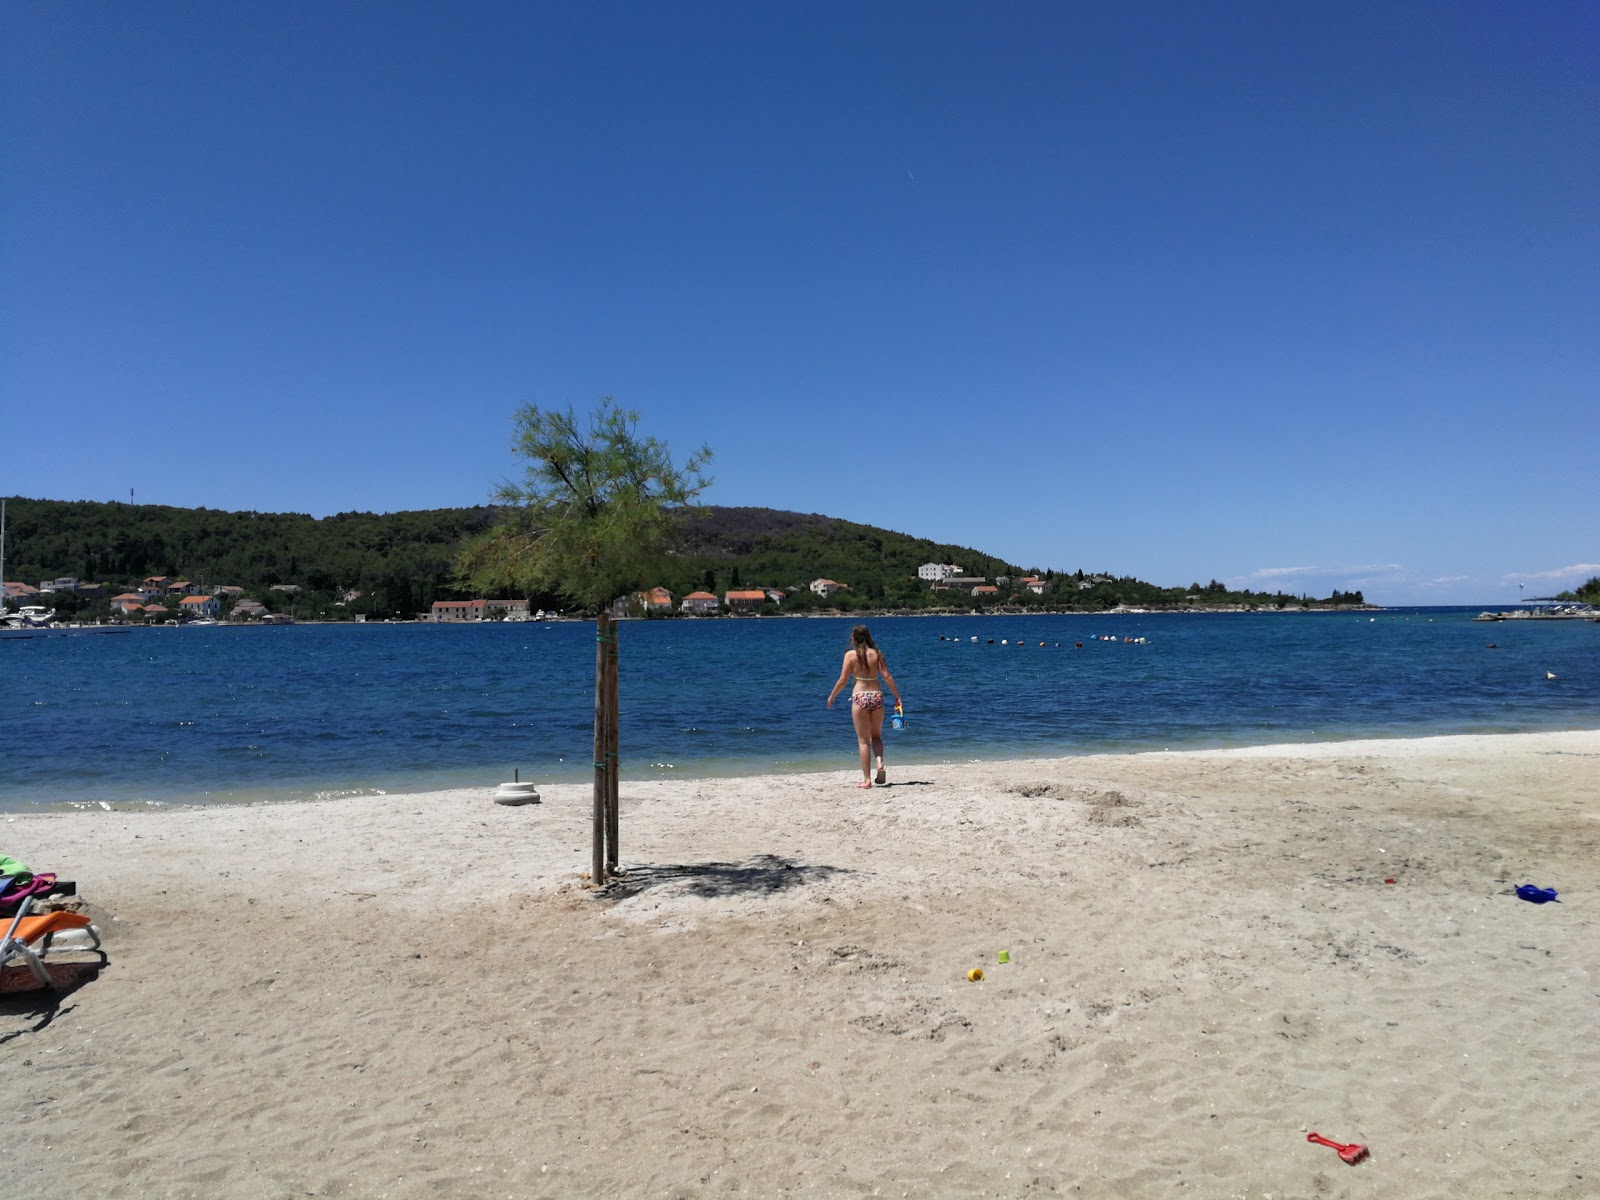 Fotografie cu Sutomiscica beach cu nivelul de curățenie in medie